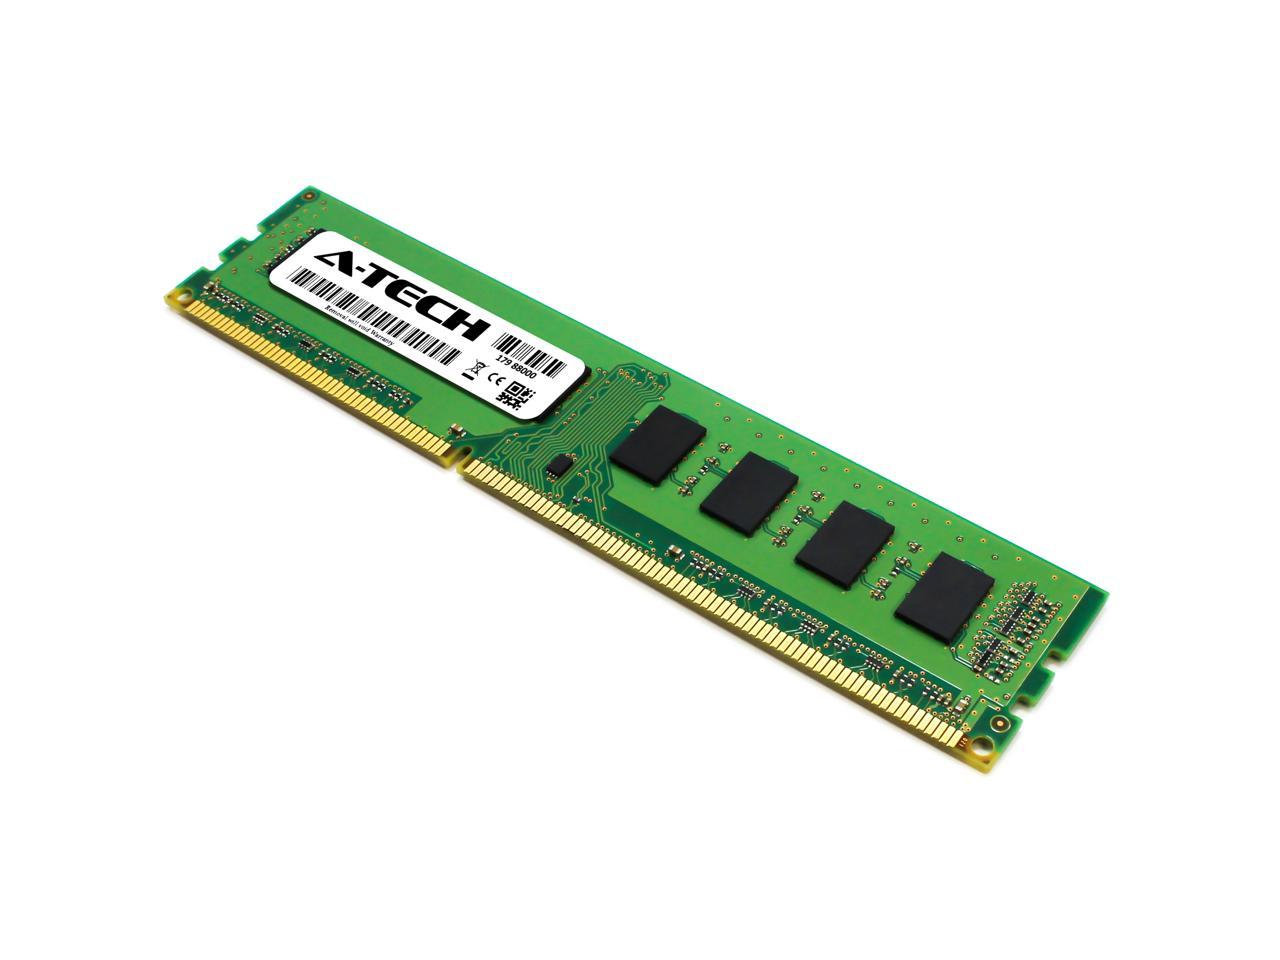 A-Tech 8GB DDR3 / DDR3L 1600 MHz PC3 12800 DIMM Desktop RAM Module | 2Rx8  1.35V Low Voltage 240-Pin Non-ECC Unbuffered Memory Upgrade Stick